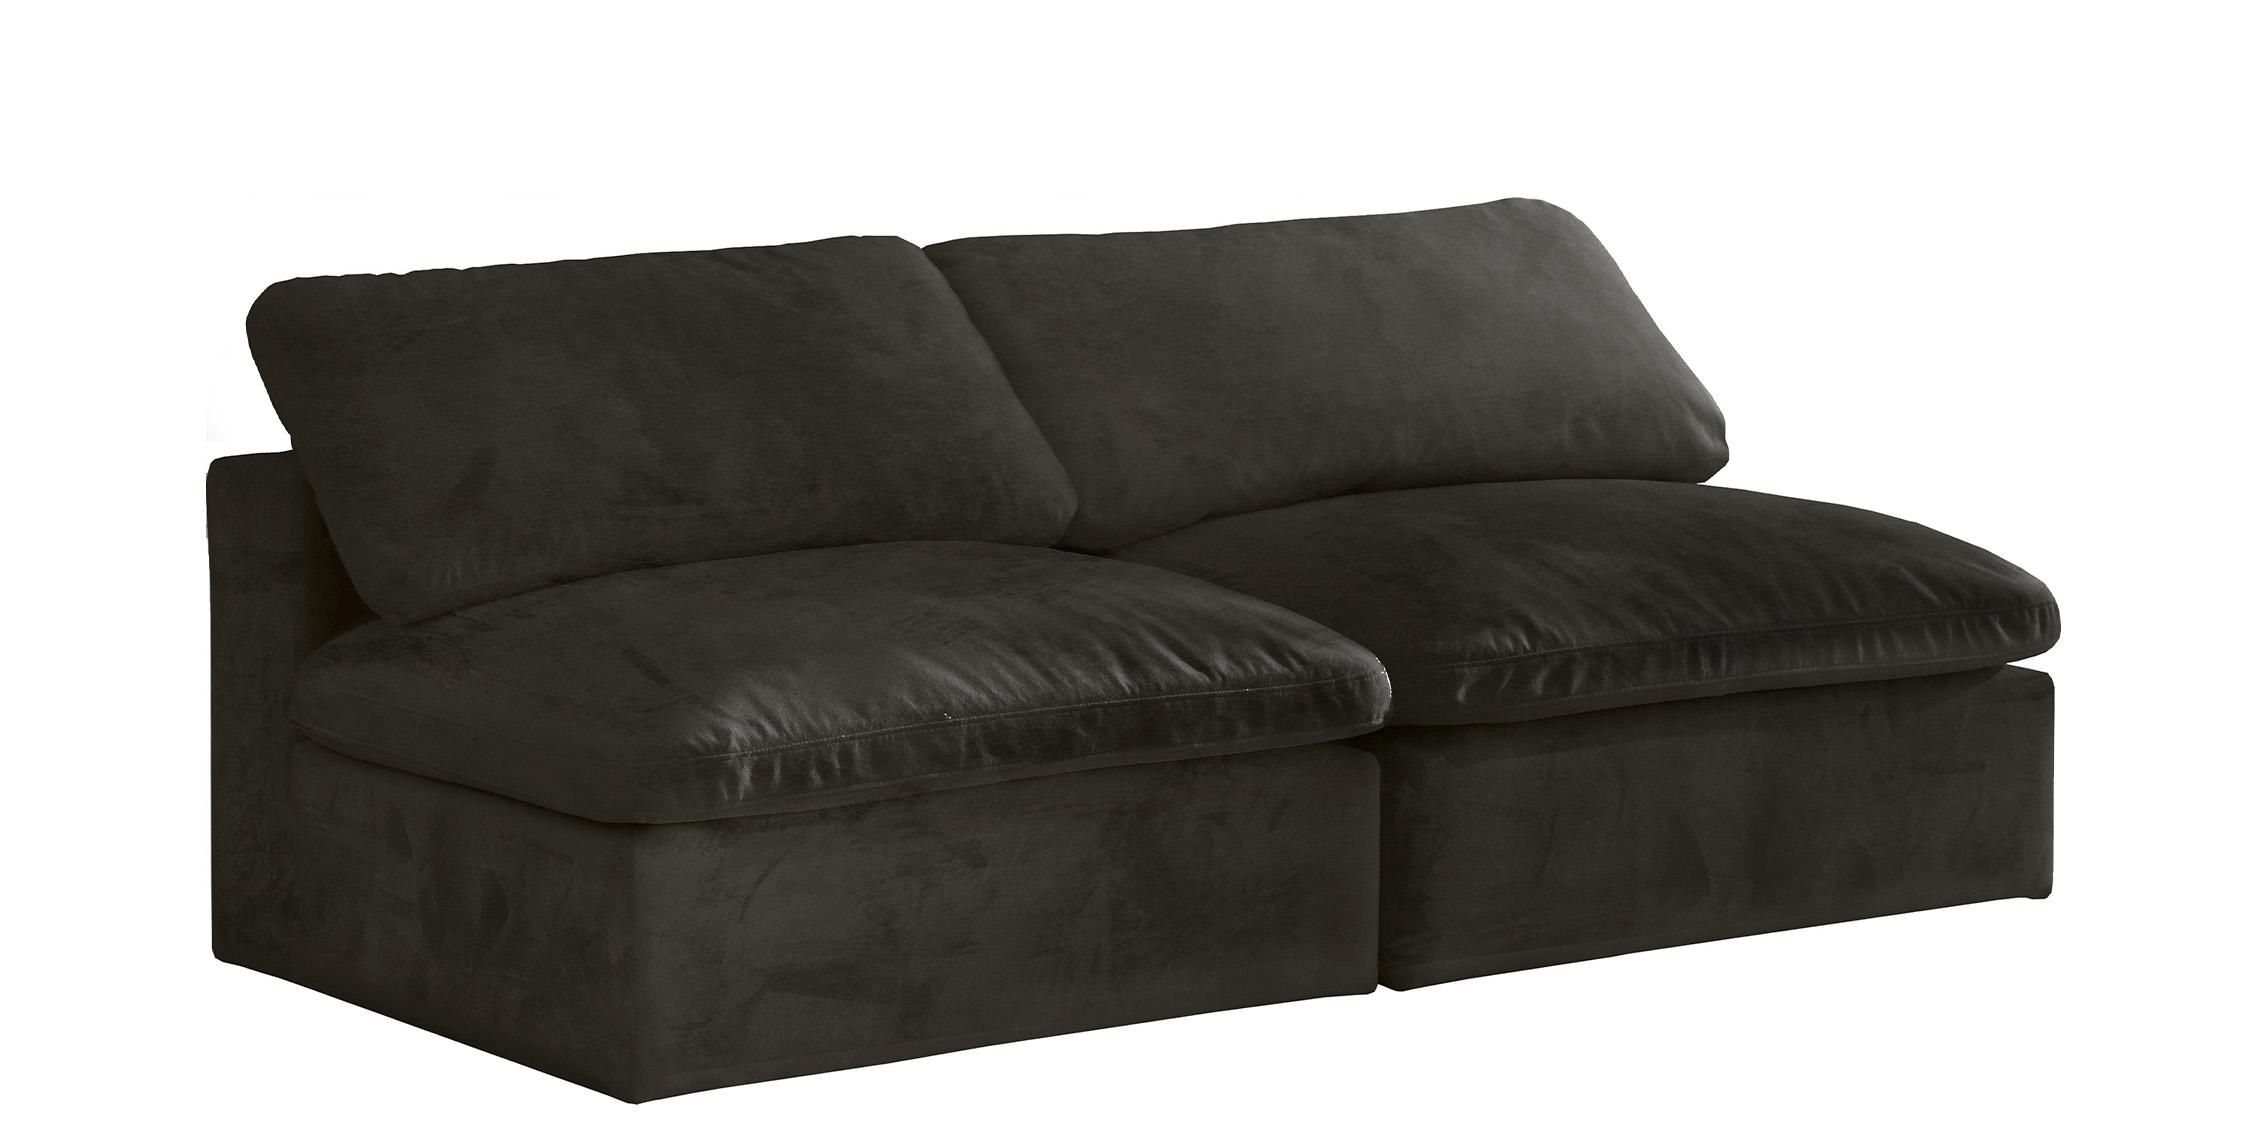 Contemporary, Modern Modular Sofa 634Black-S78 634Black-S78 in Black Fabric